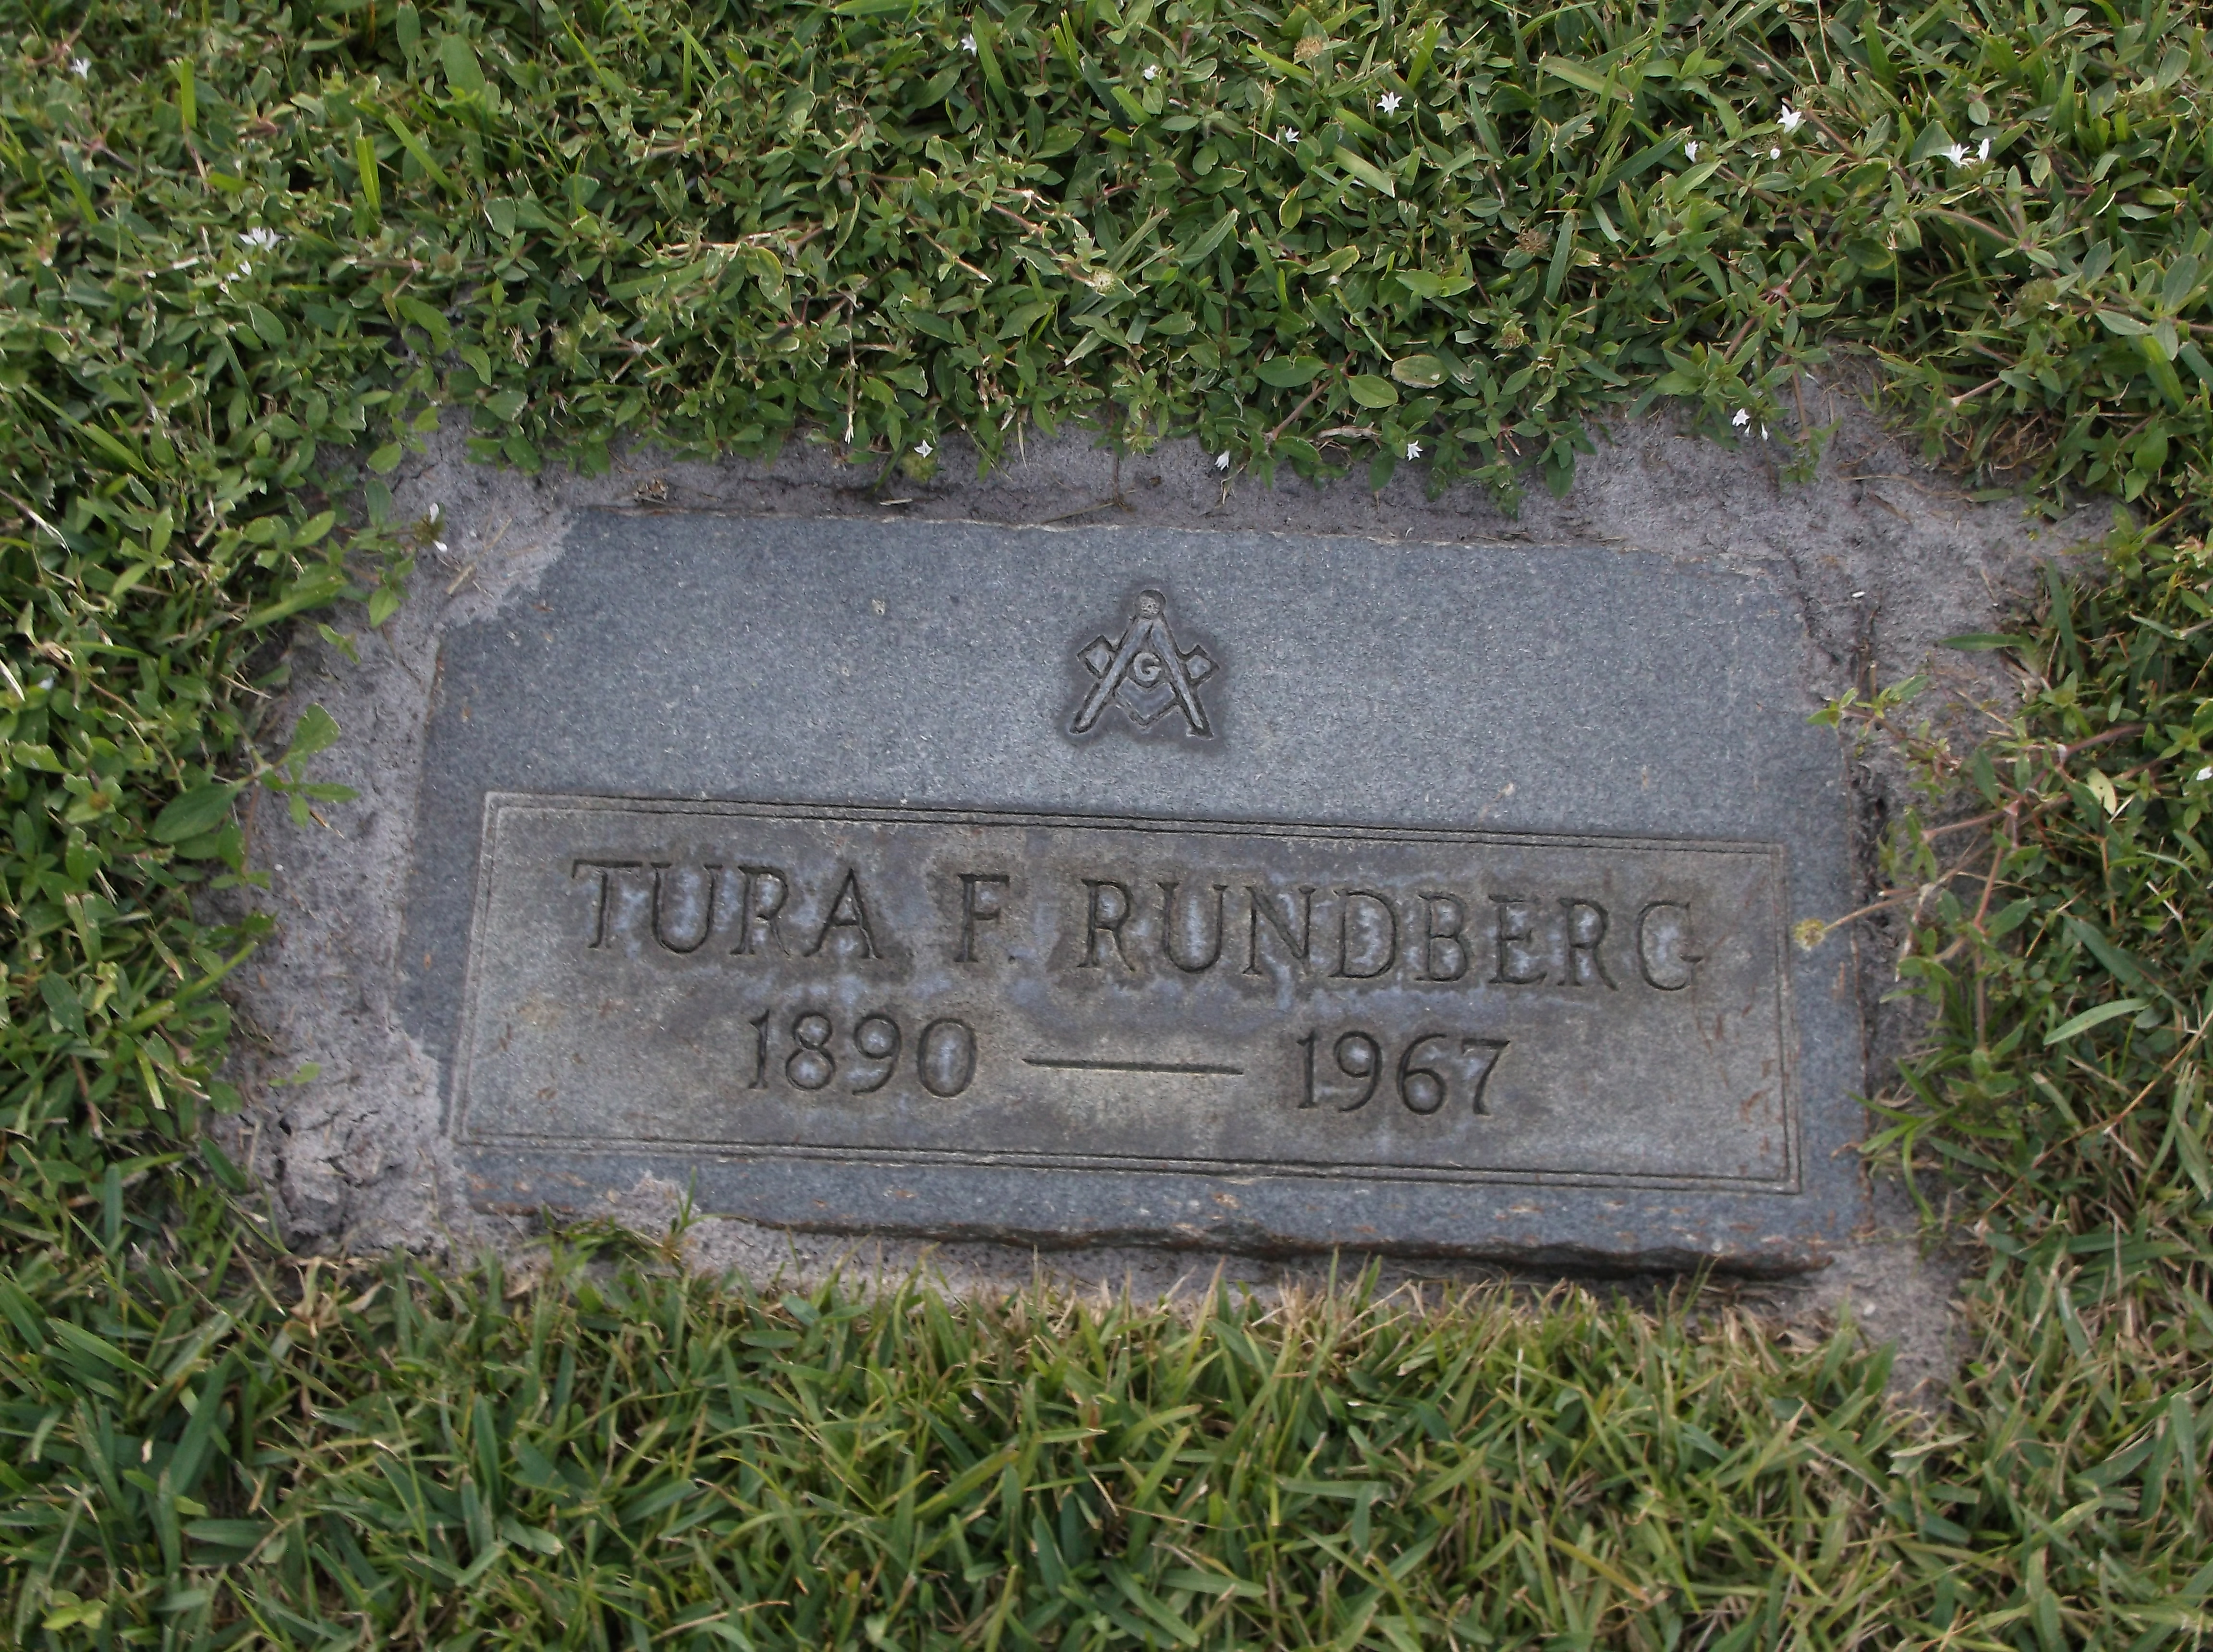 Tura F Rundberg